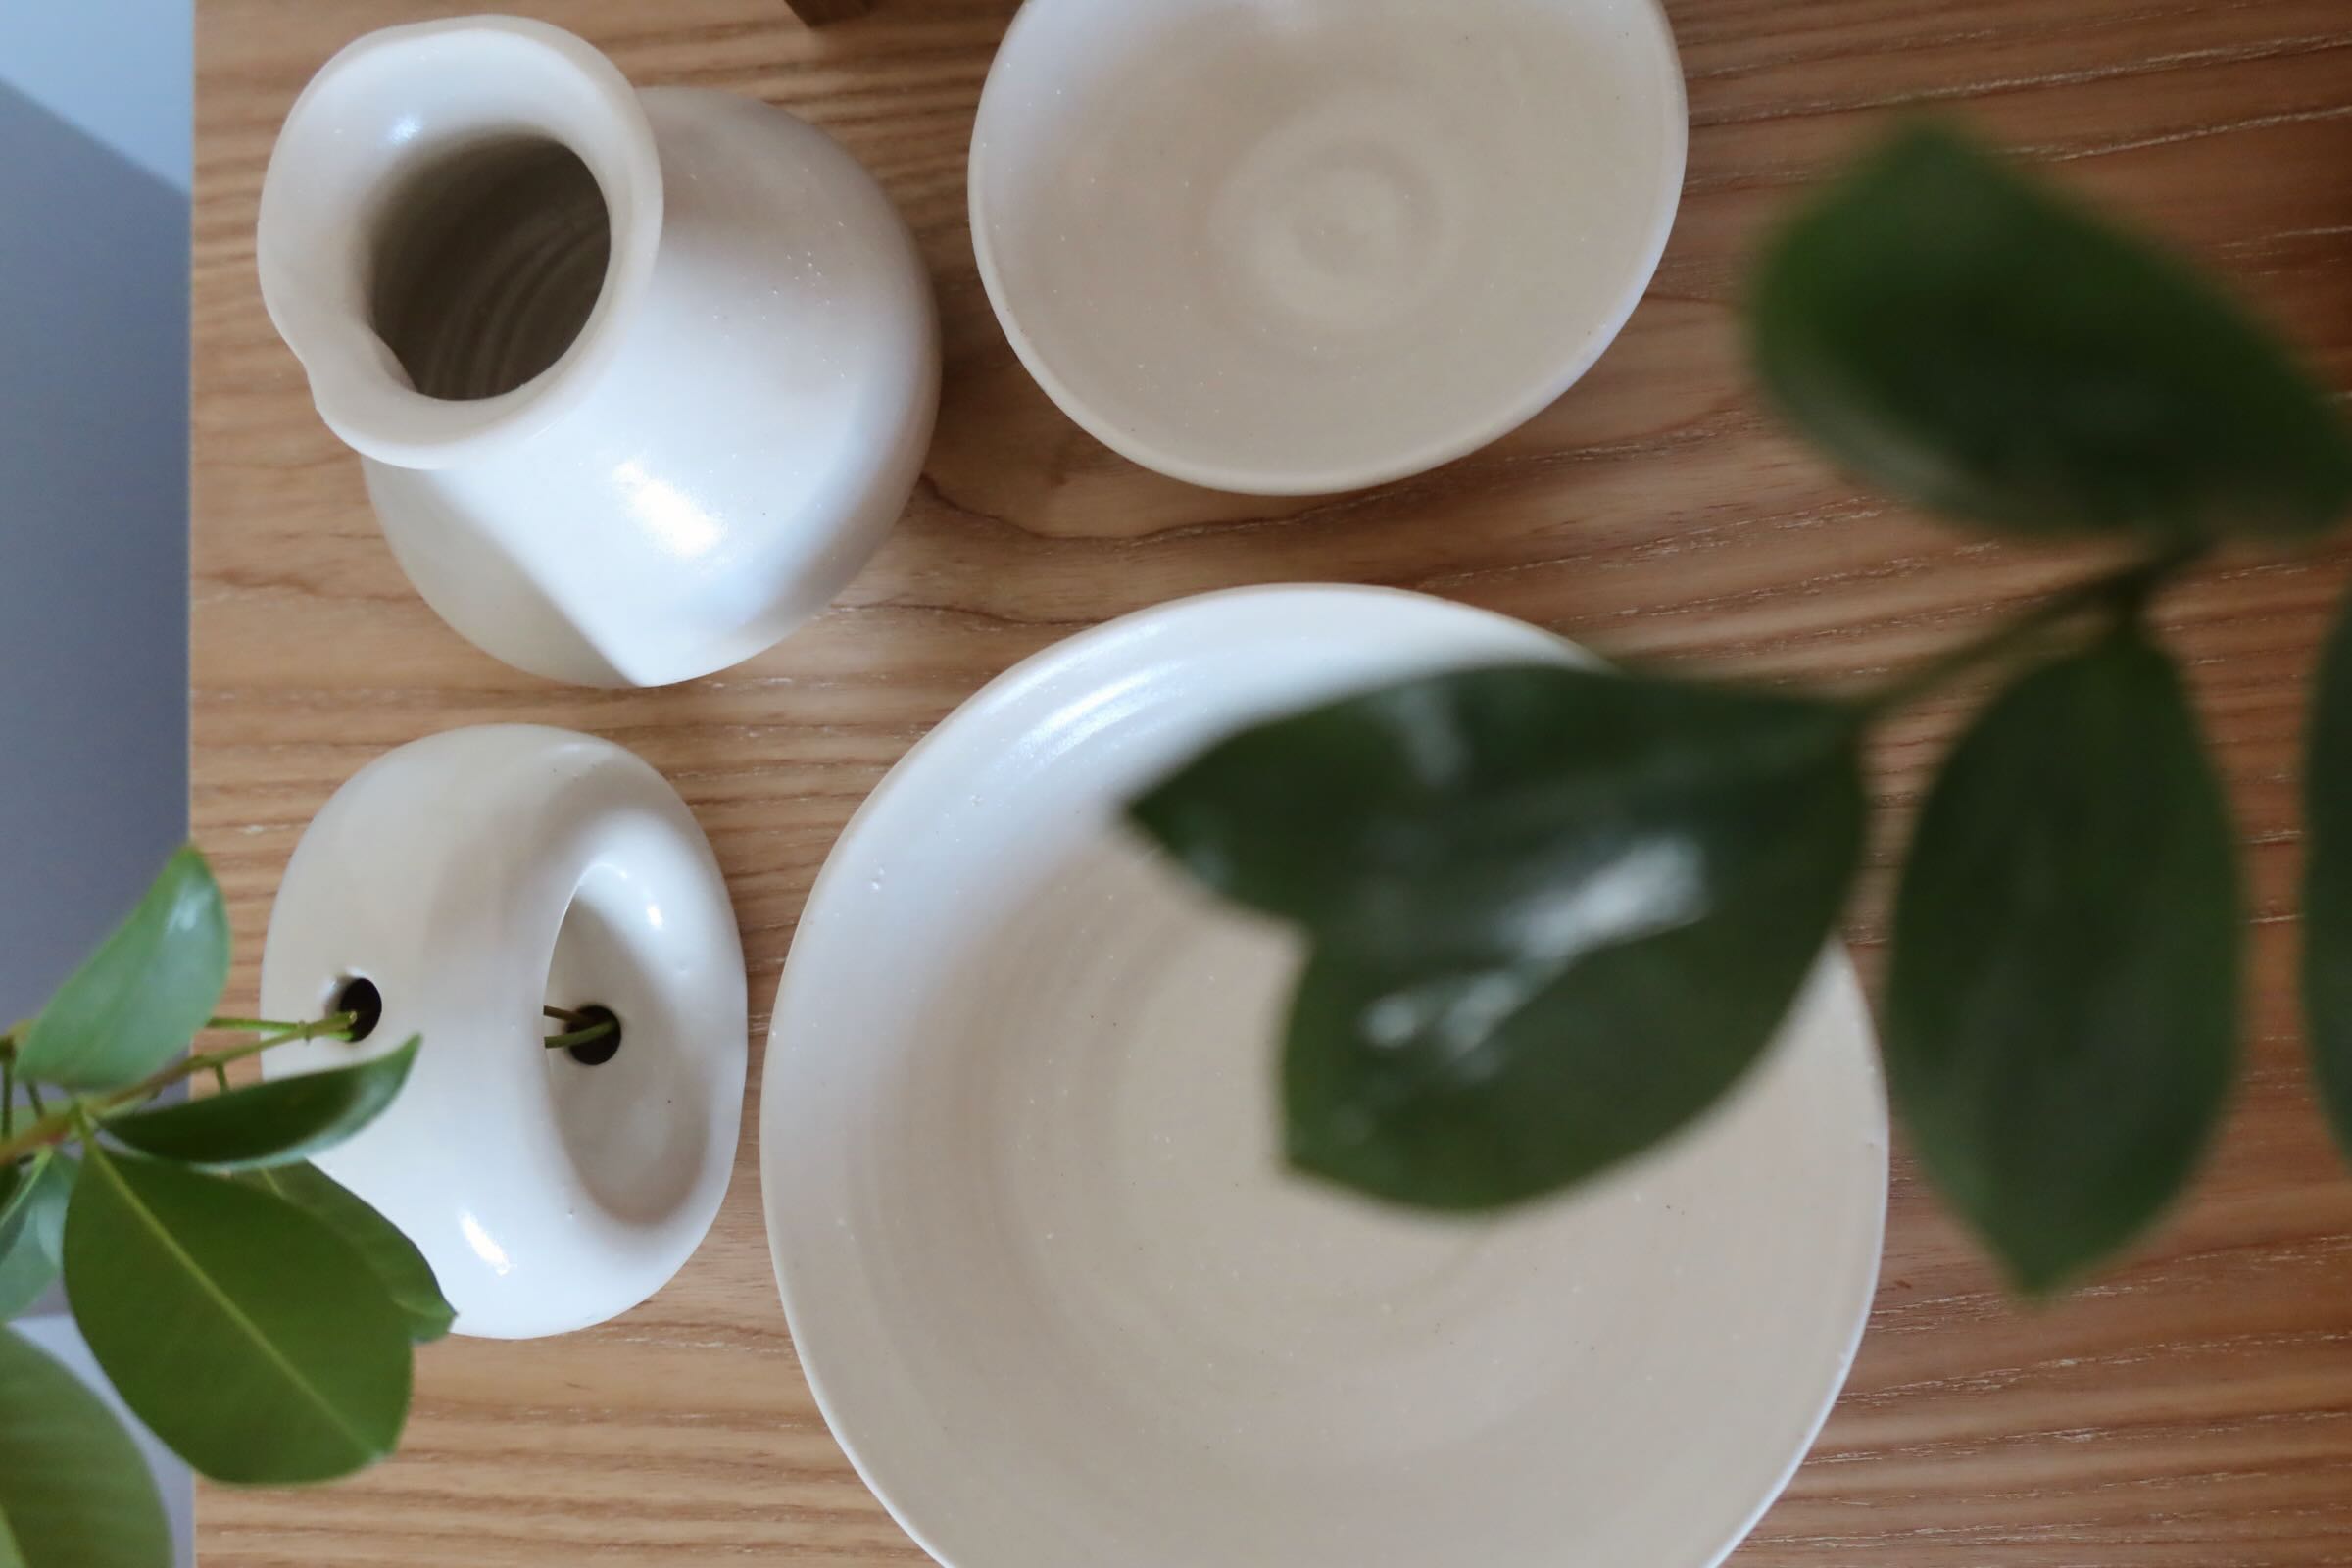 assets/ceramics6.jpeg|Photo of white ceramic bowls and vases